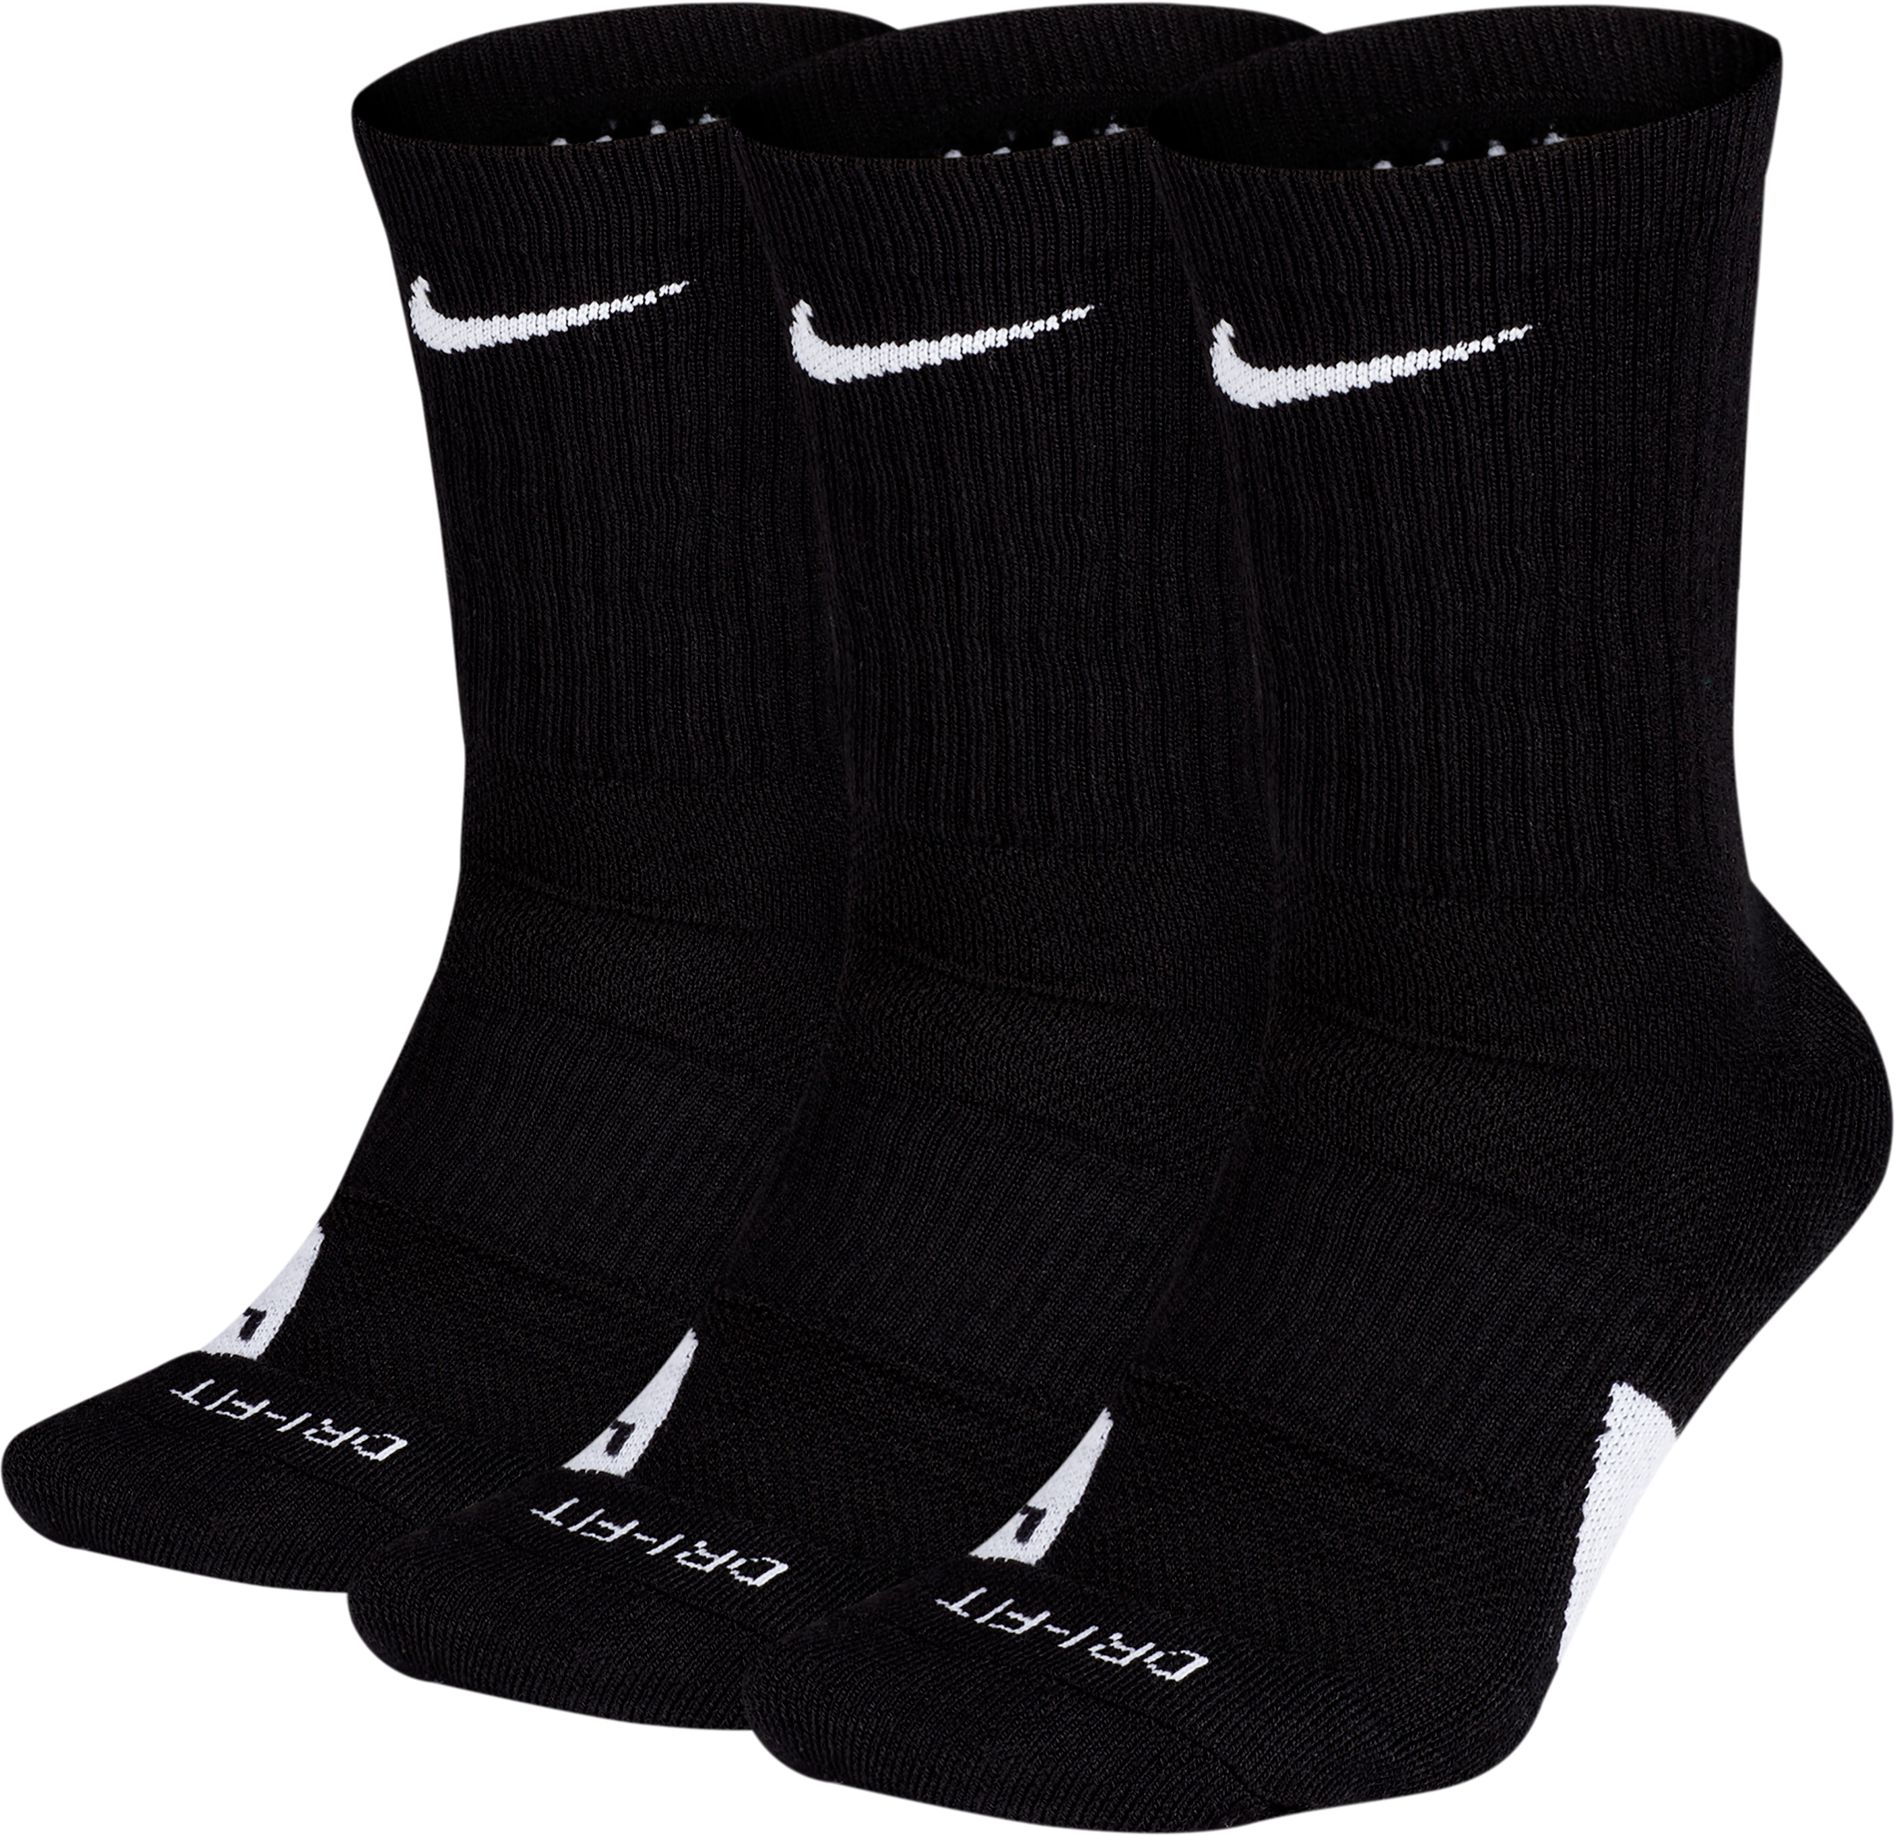 Nike Elite Basketball Crew Socks - 3 